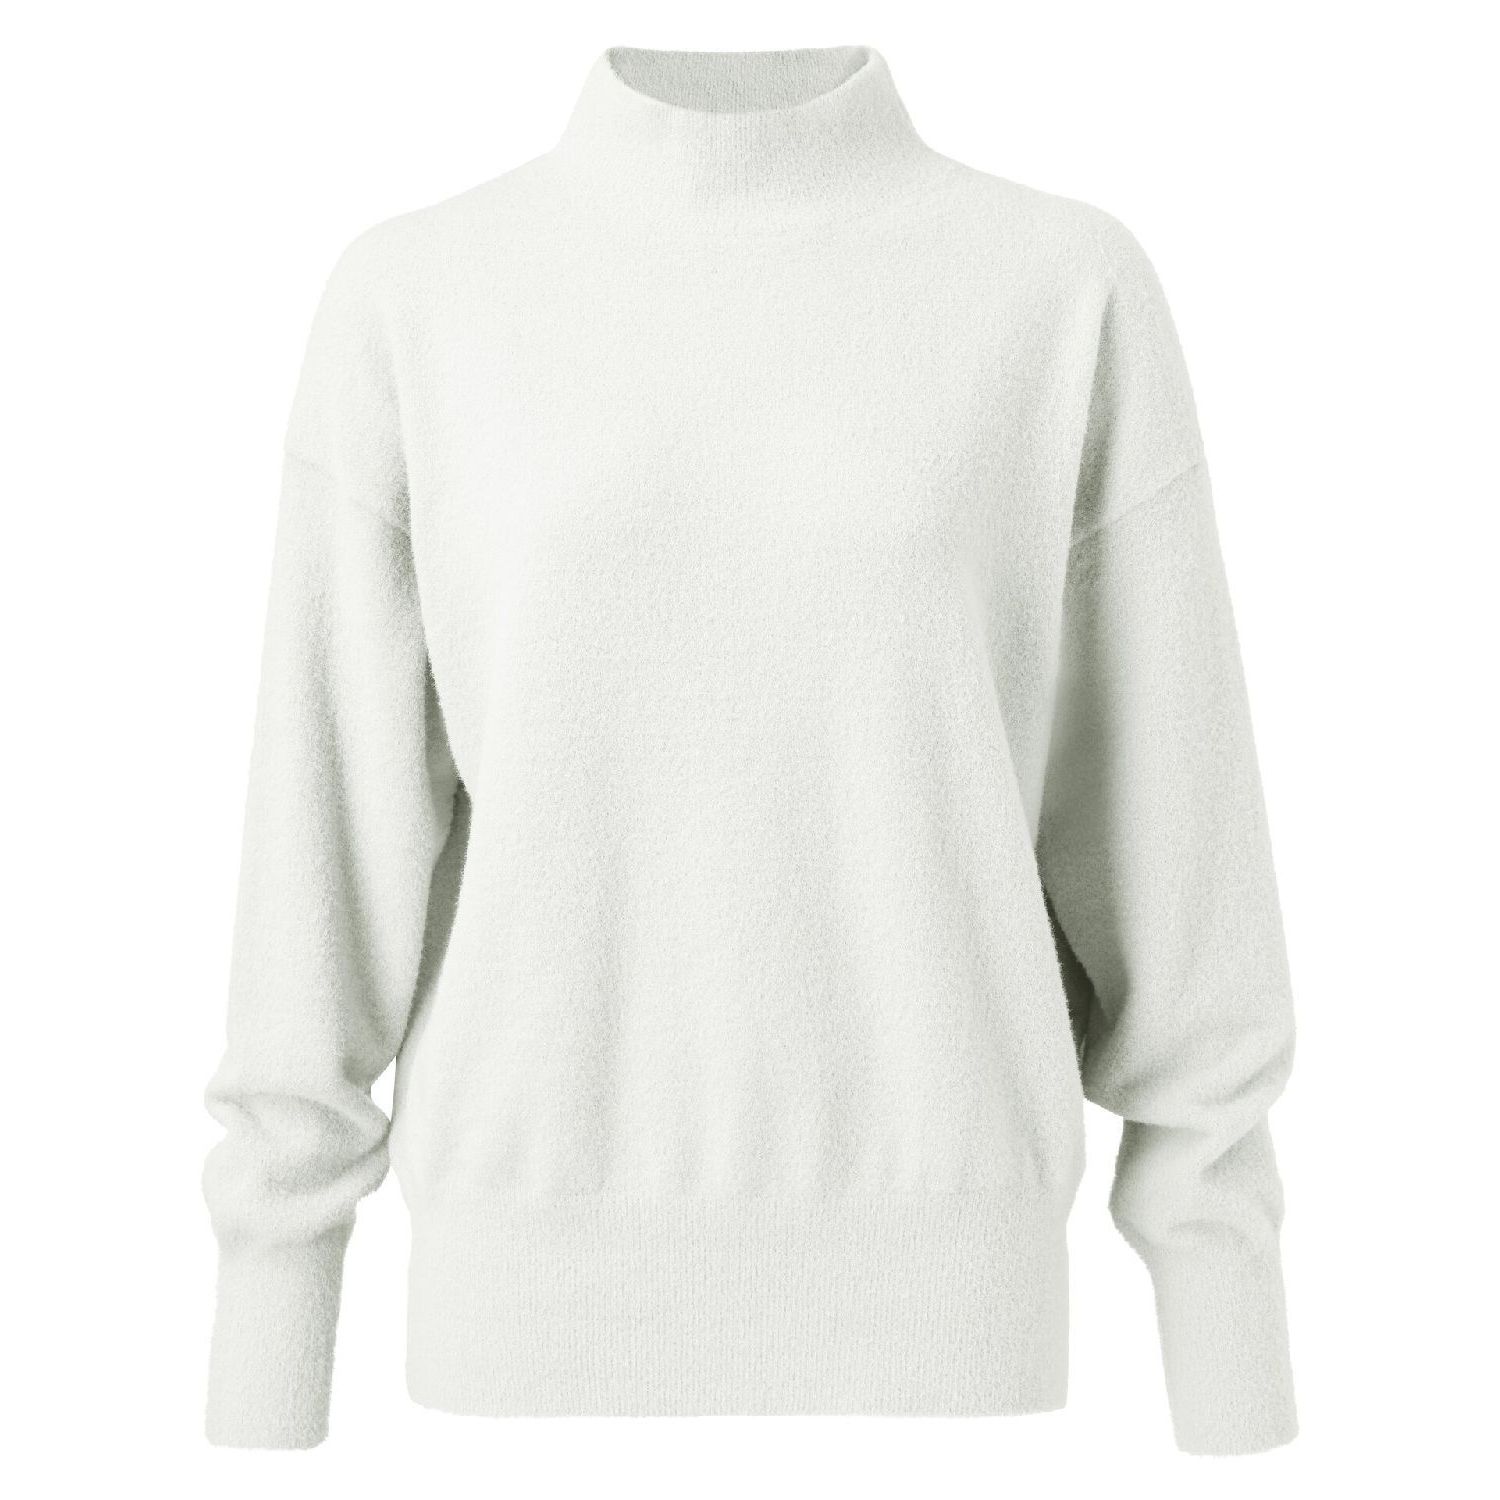 Yaya brushed high neck sweater wool white